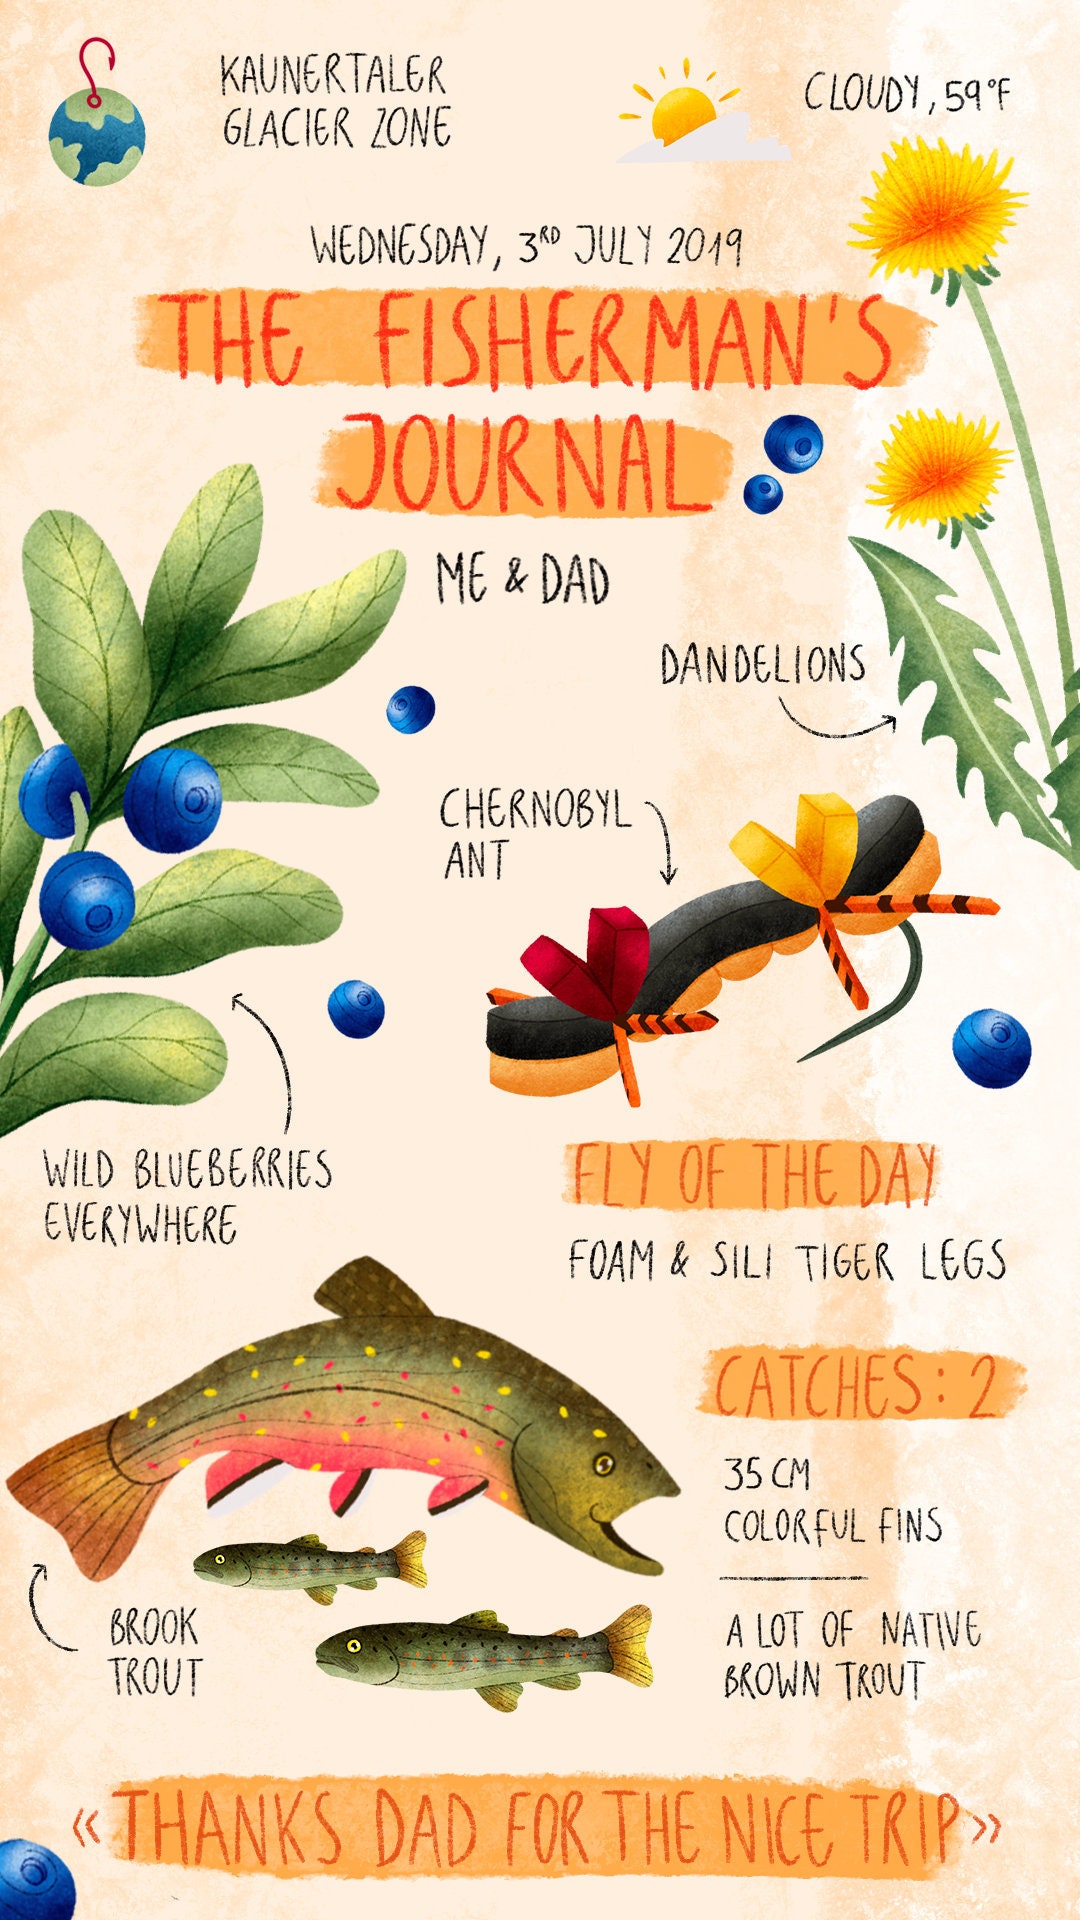 The Fisherman's Journal